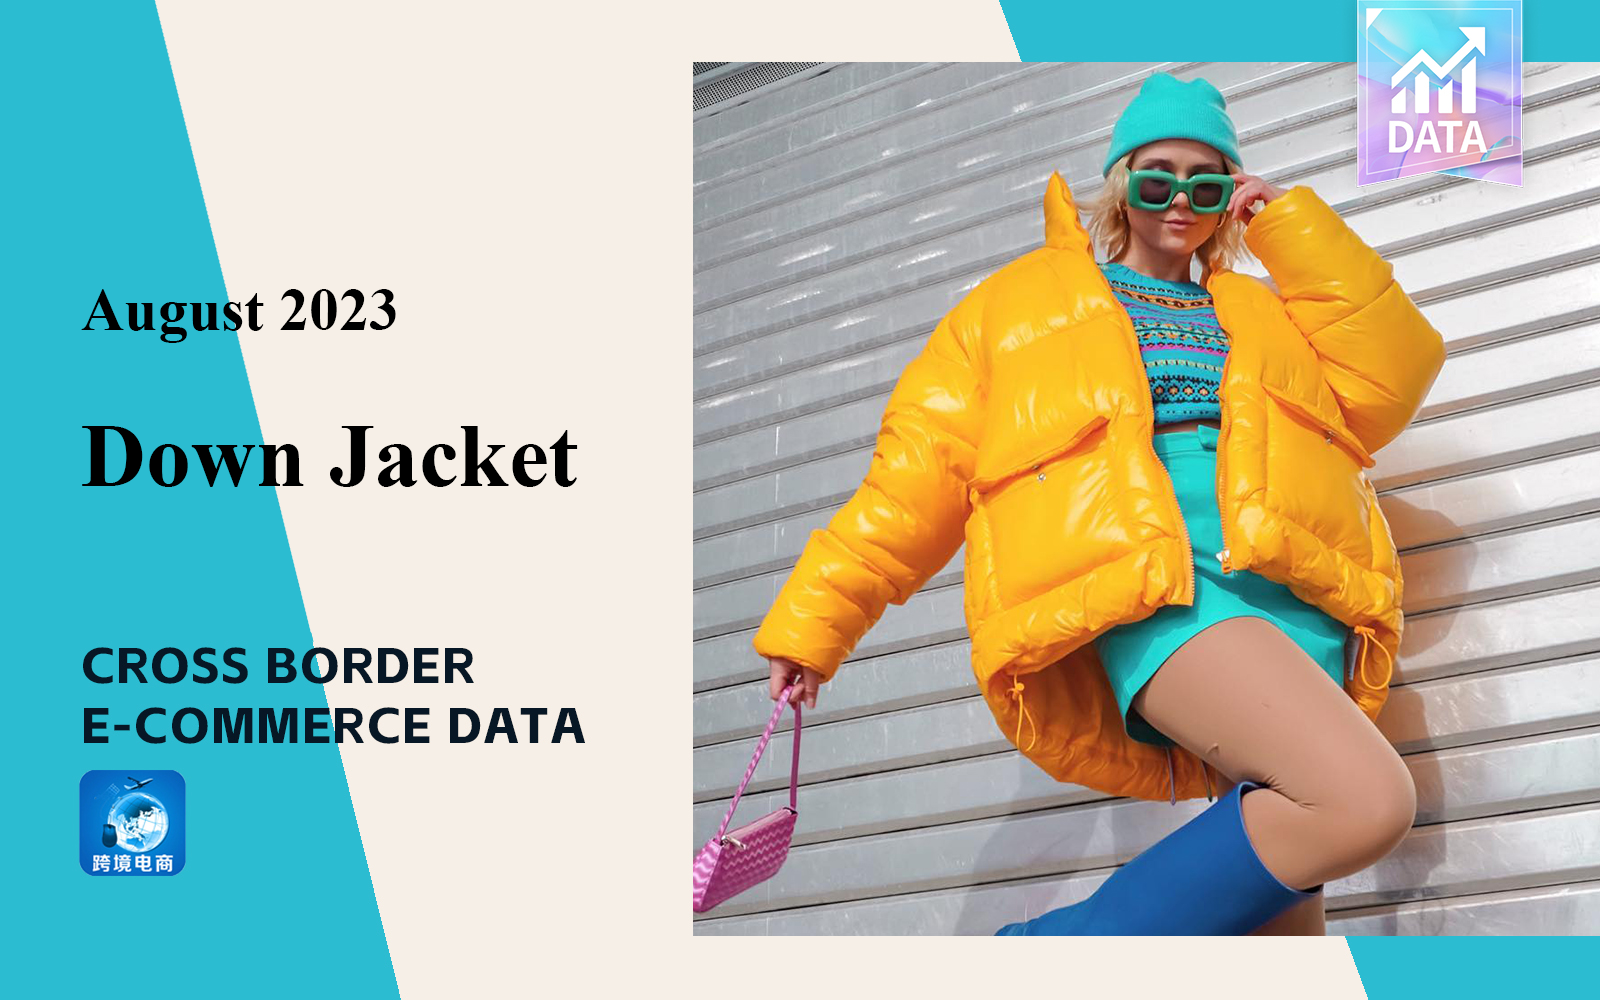 The Data Analysis of Cross-border Women's Down Jacket E-commerce in August